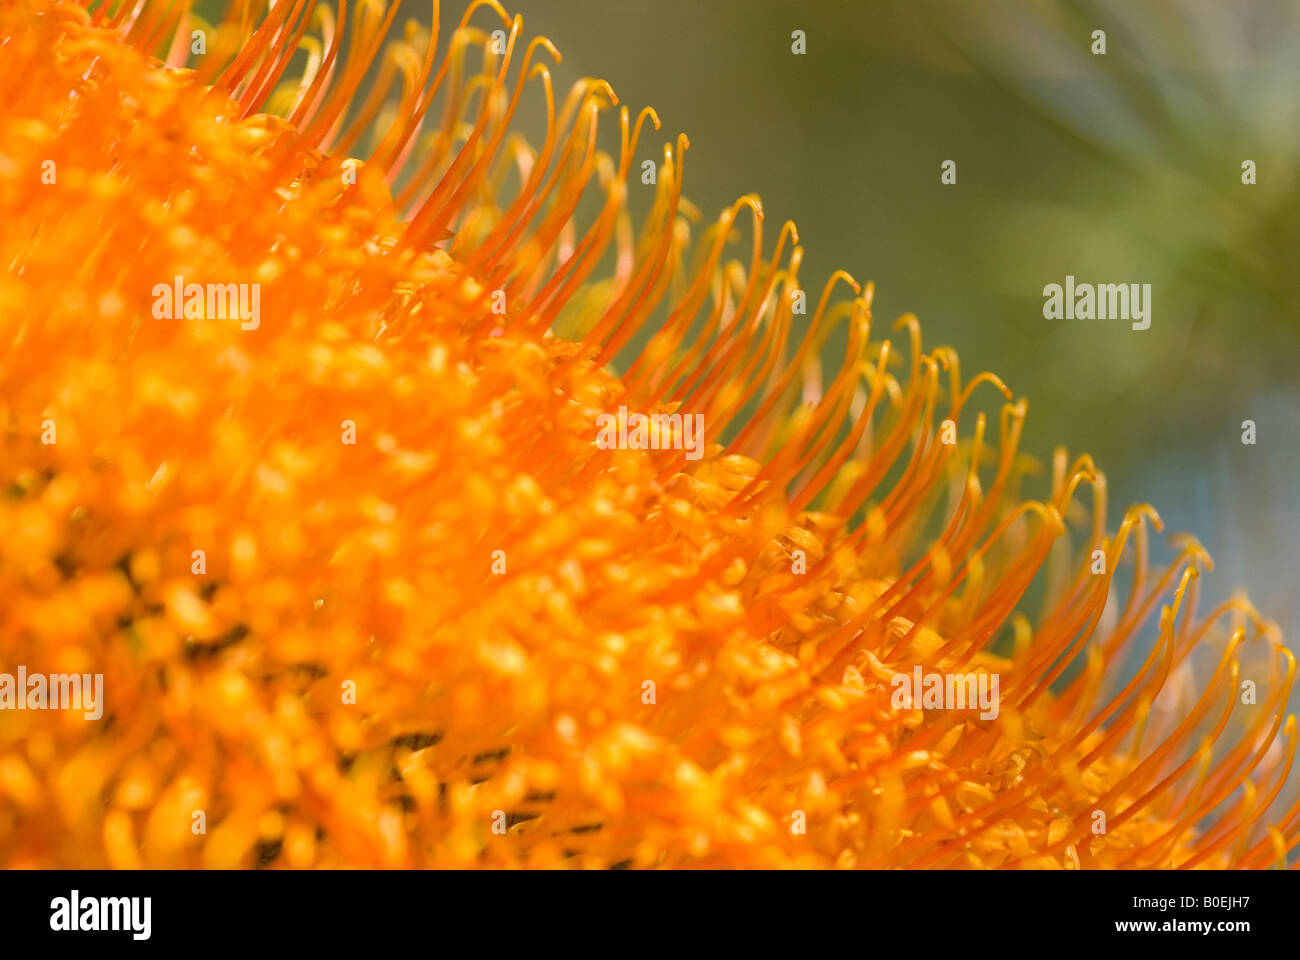 Banksia australien Golden Candle flower Banque D'Images